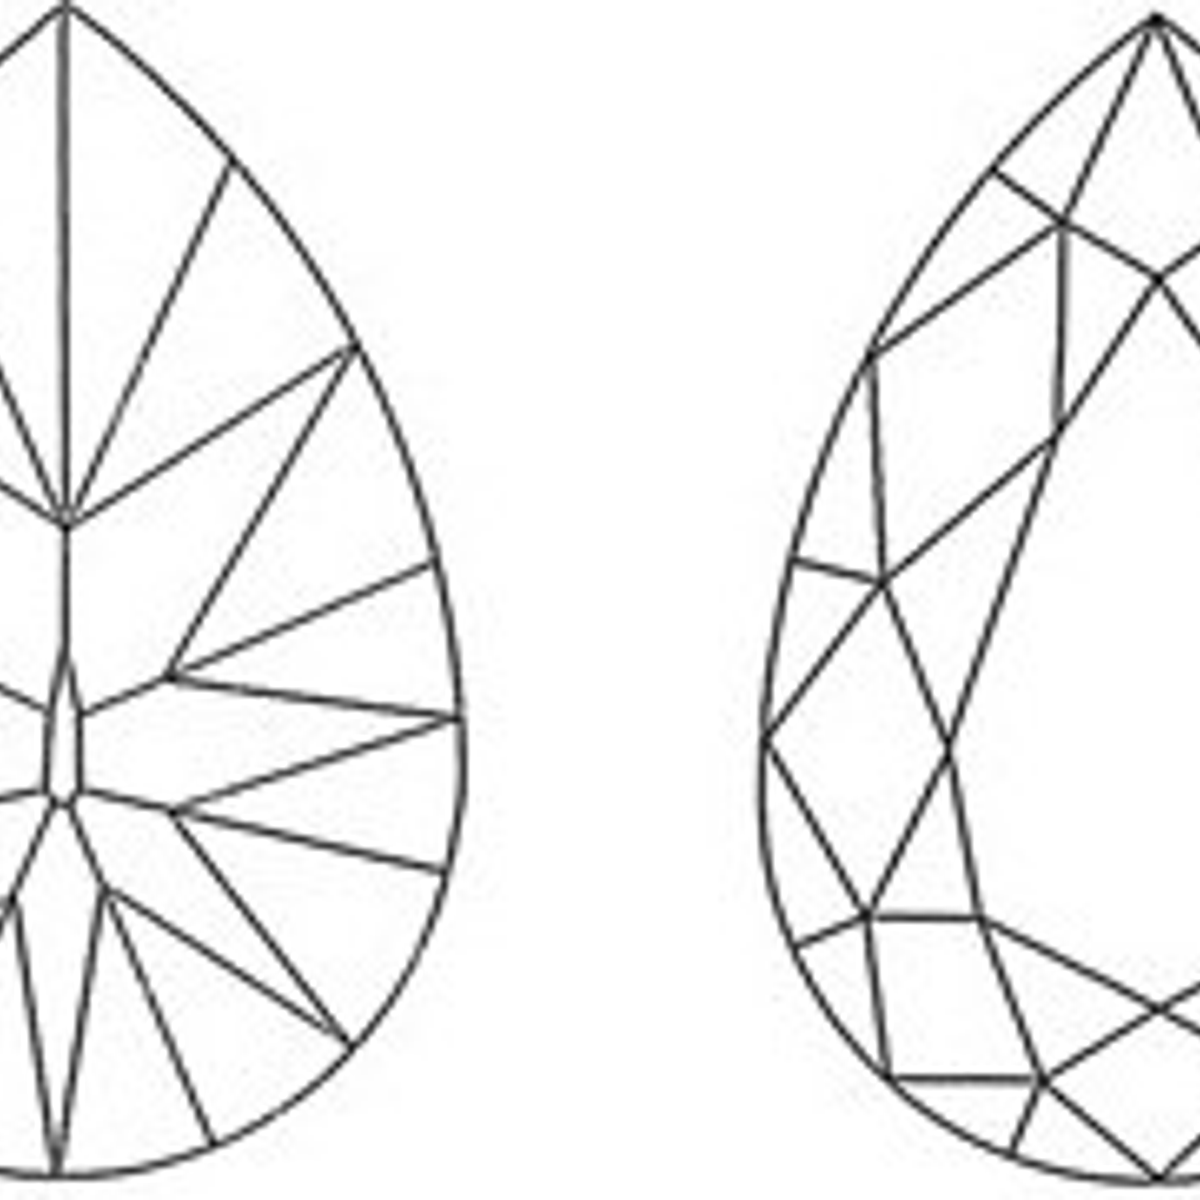 Pear shape